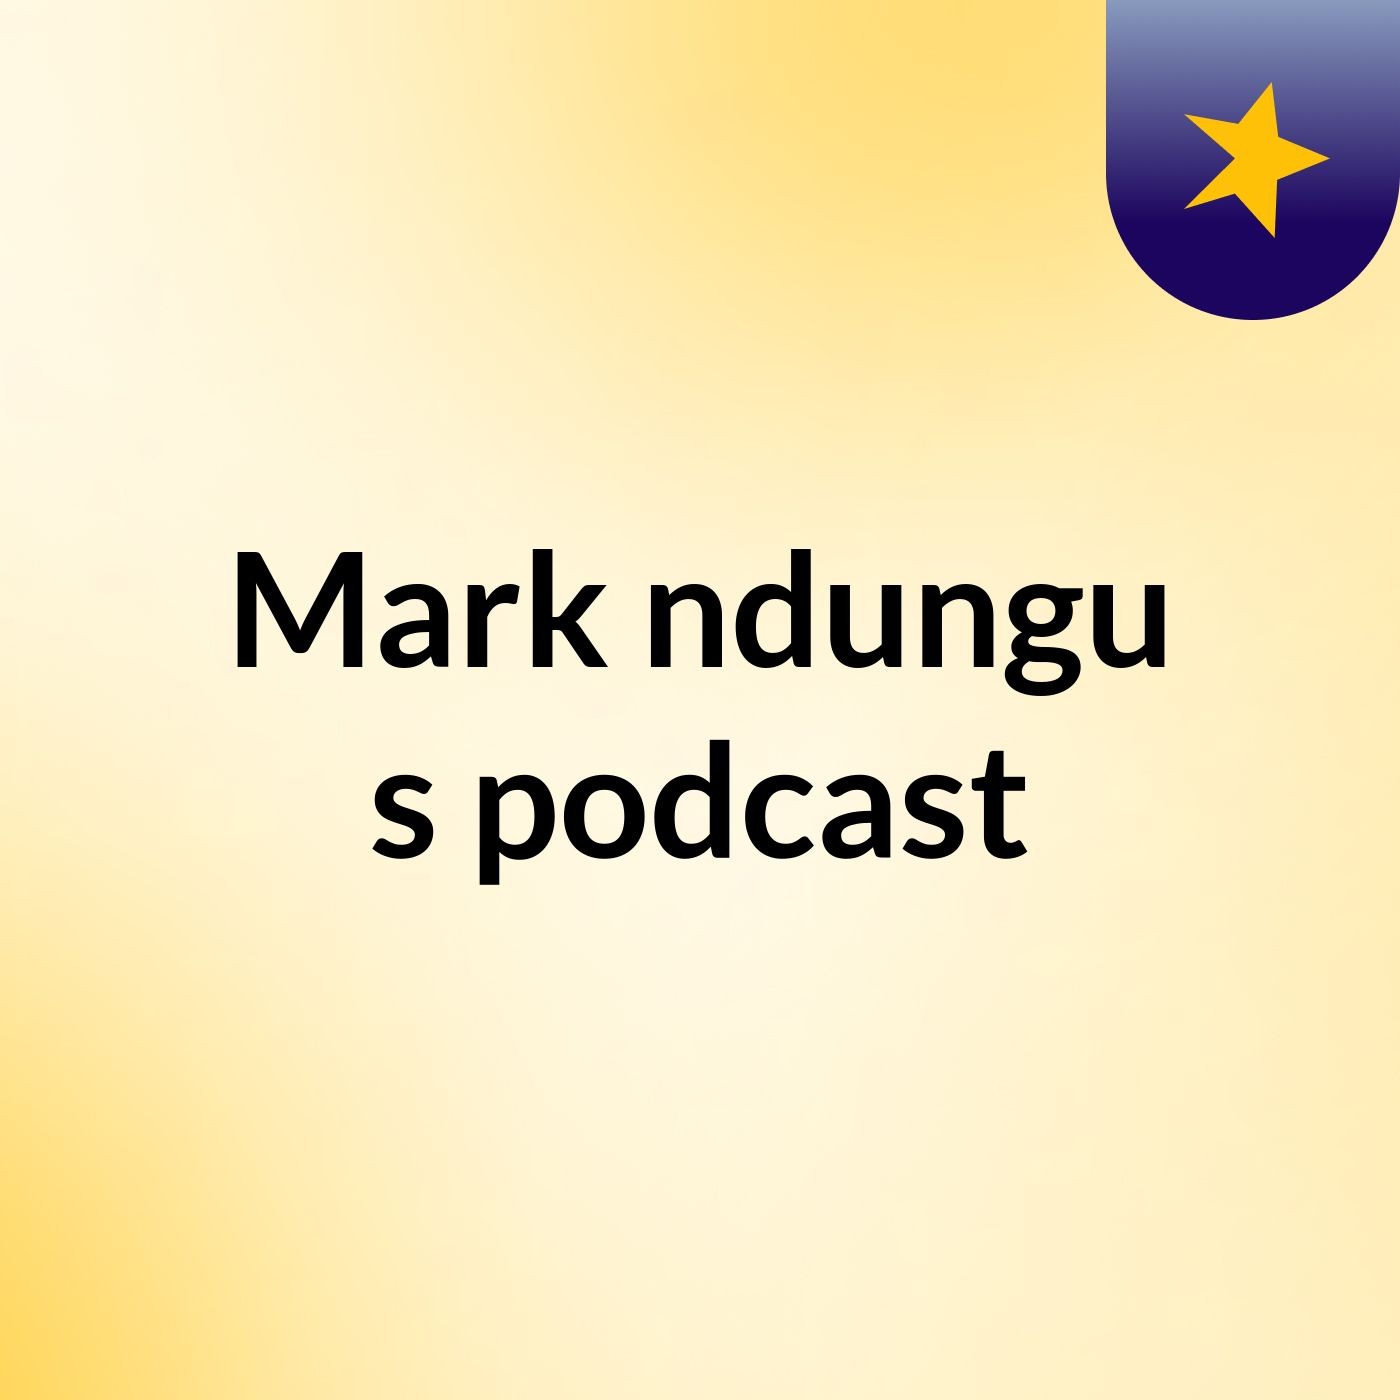 Episode 15 - Mark ndungu's podcast